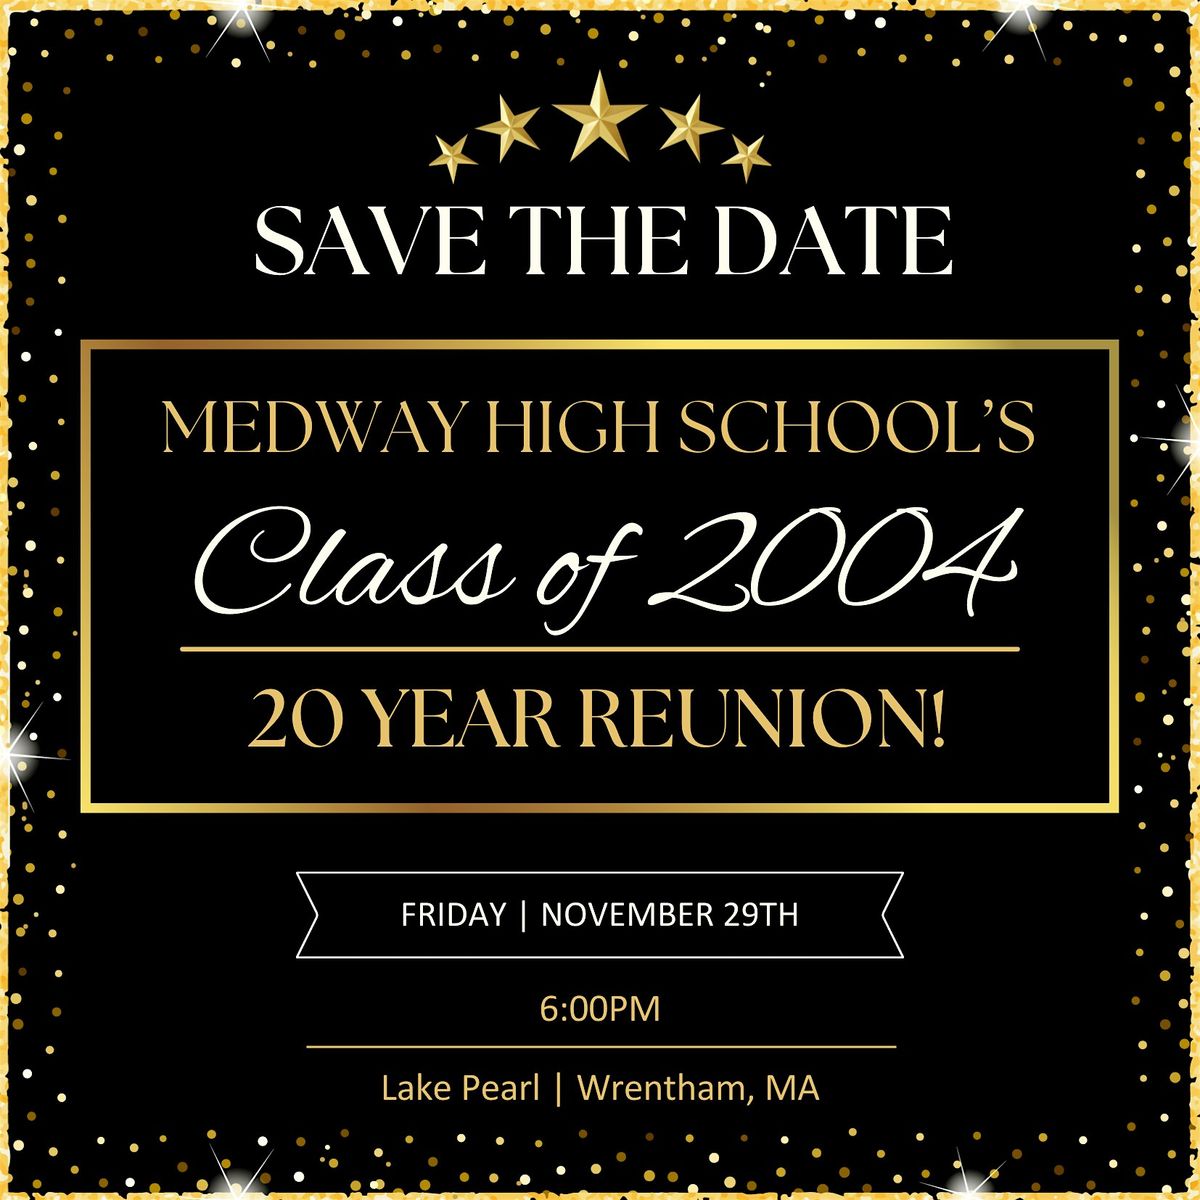 Medway High School\u2019s *Class of 2004* 20 Year Reunion!